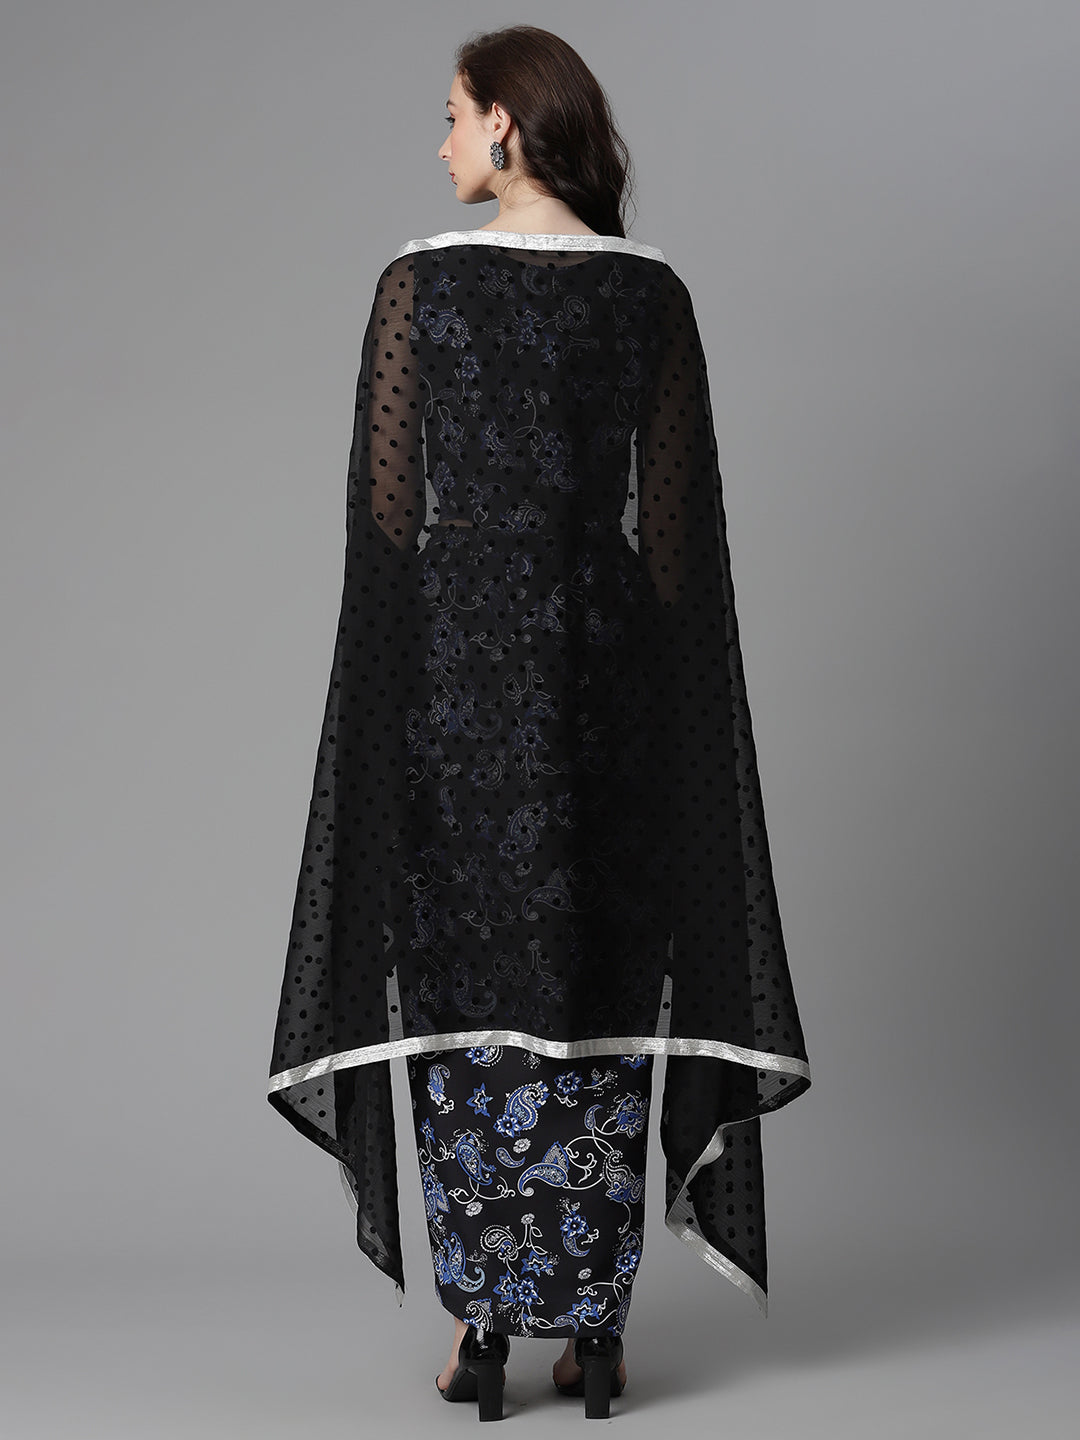 Black Digital Print Top Skirt With Shrug